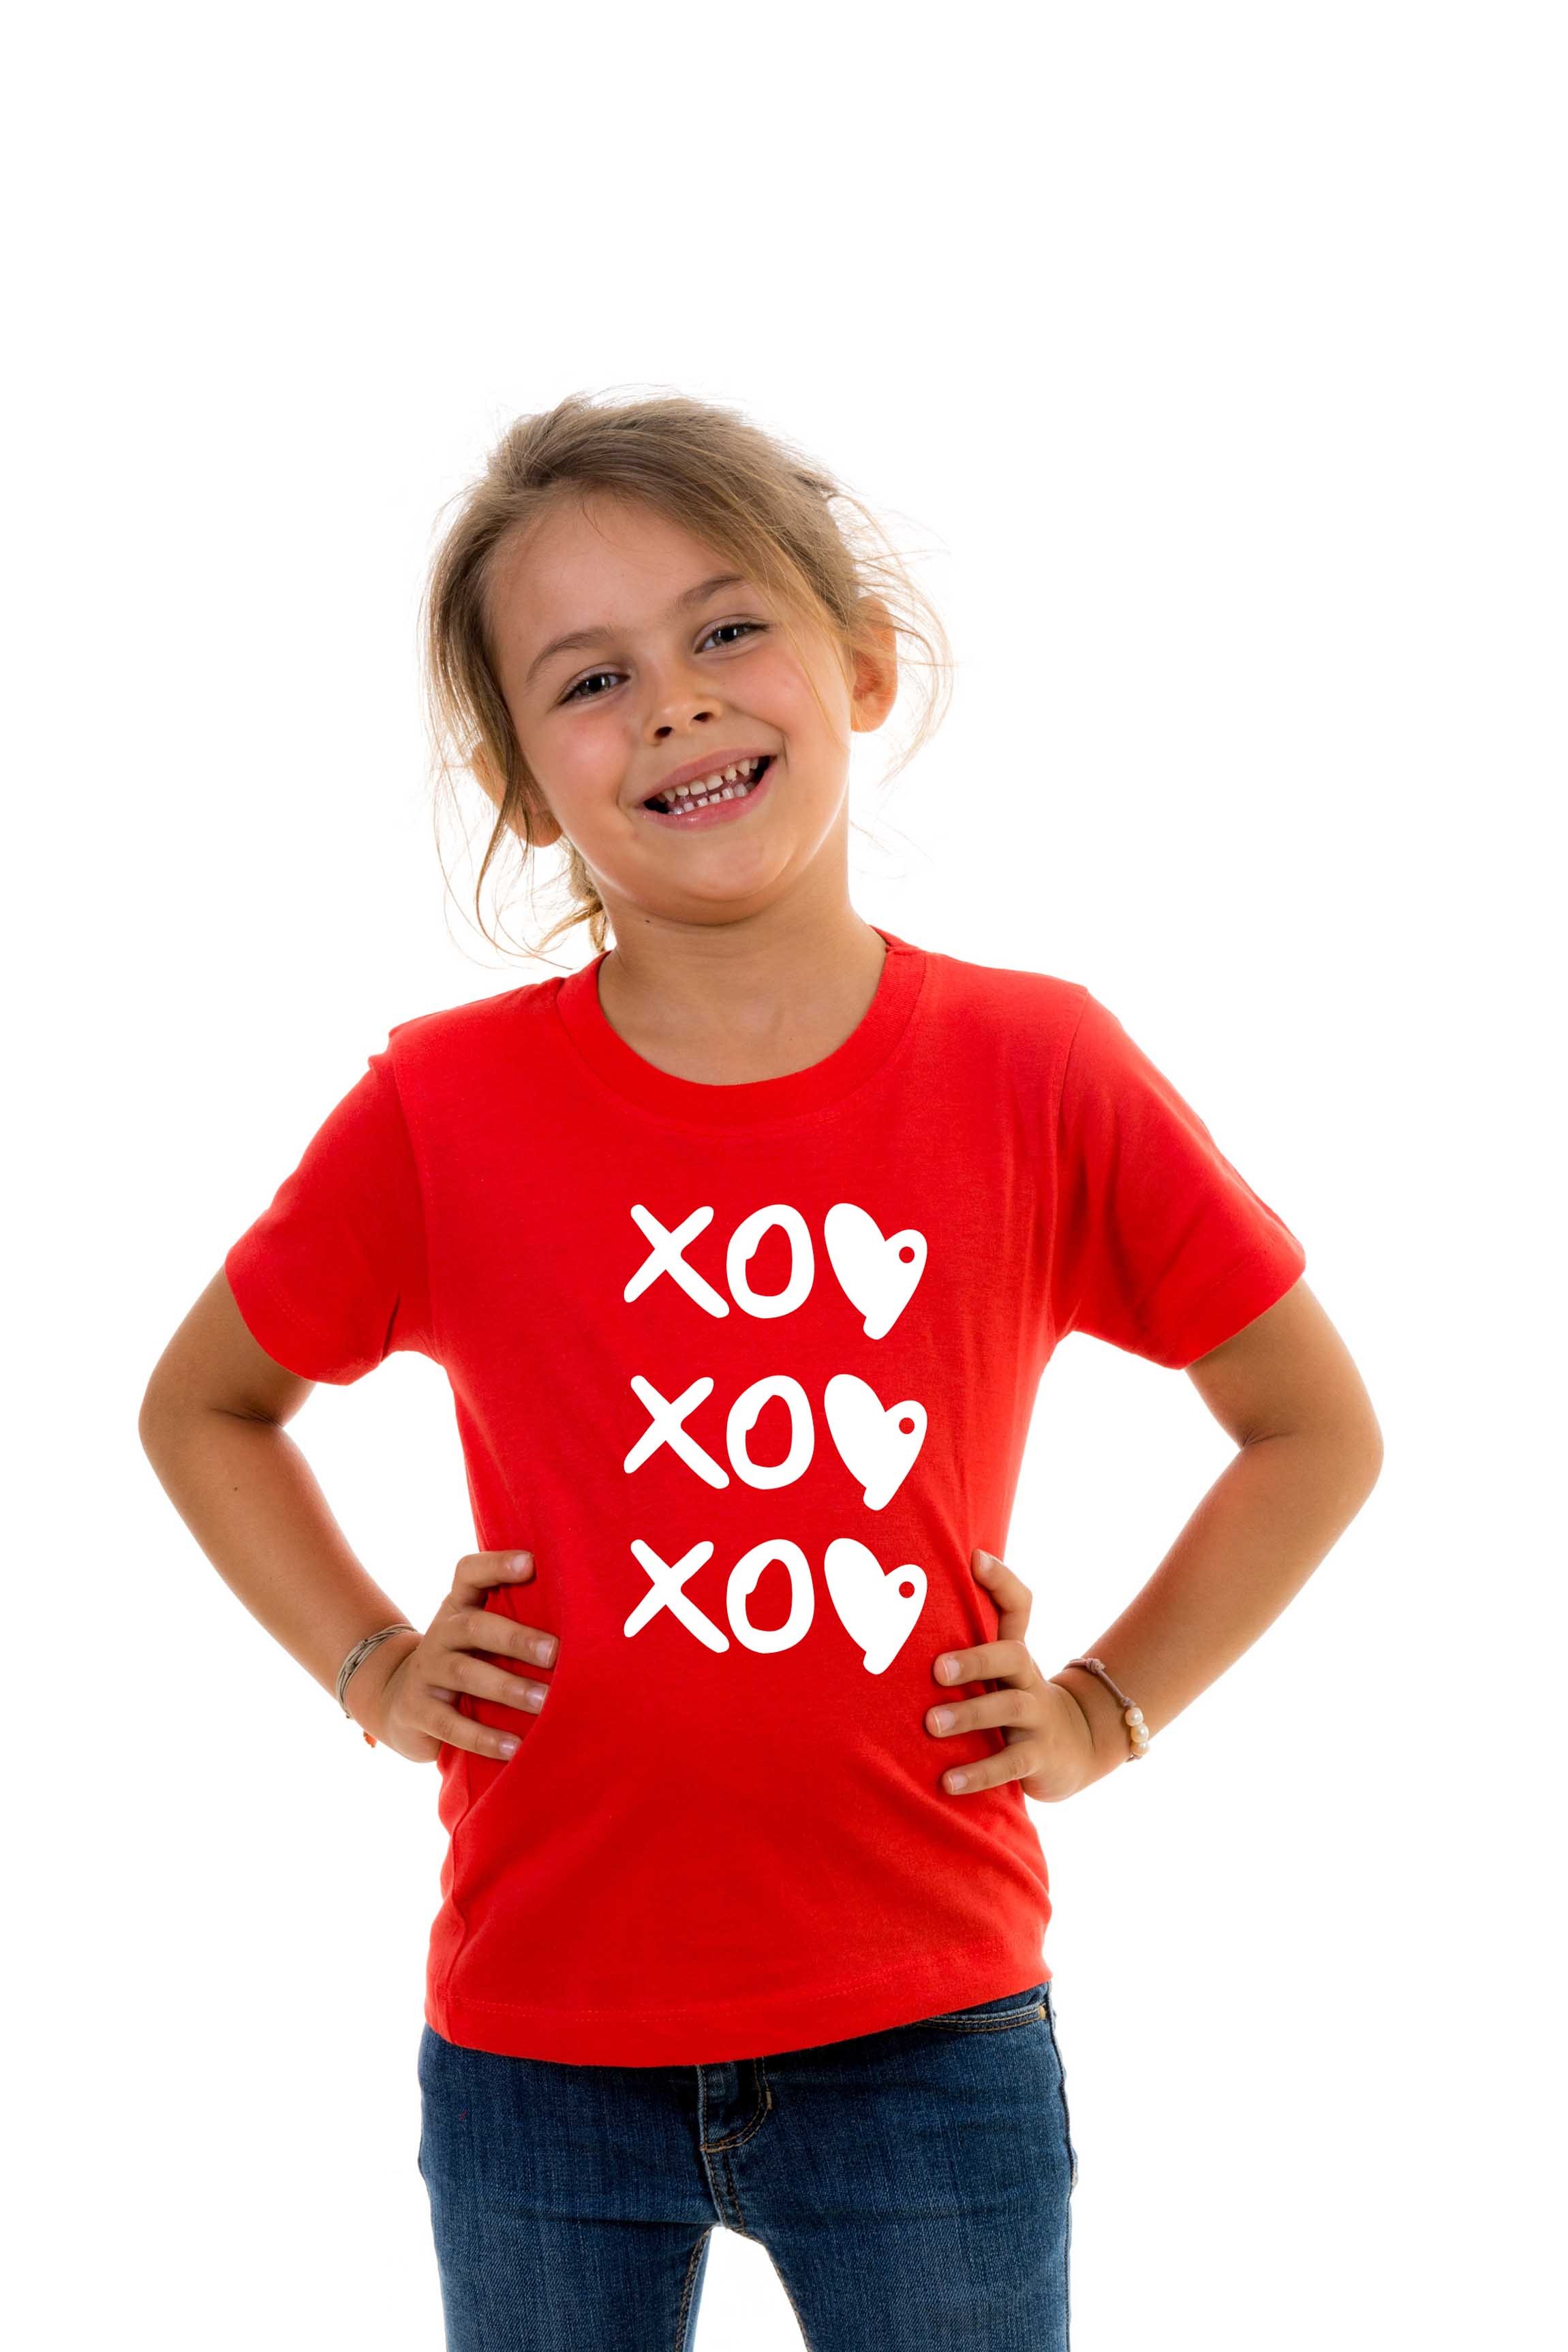 T-shirt kid XOXOXO - Kids - T-shirts - Shop